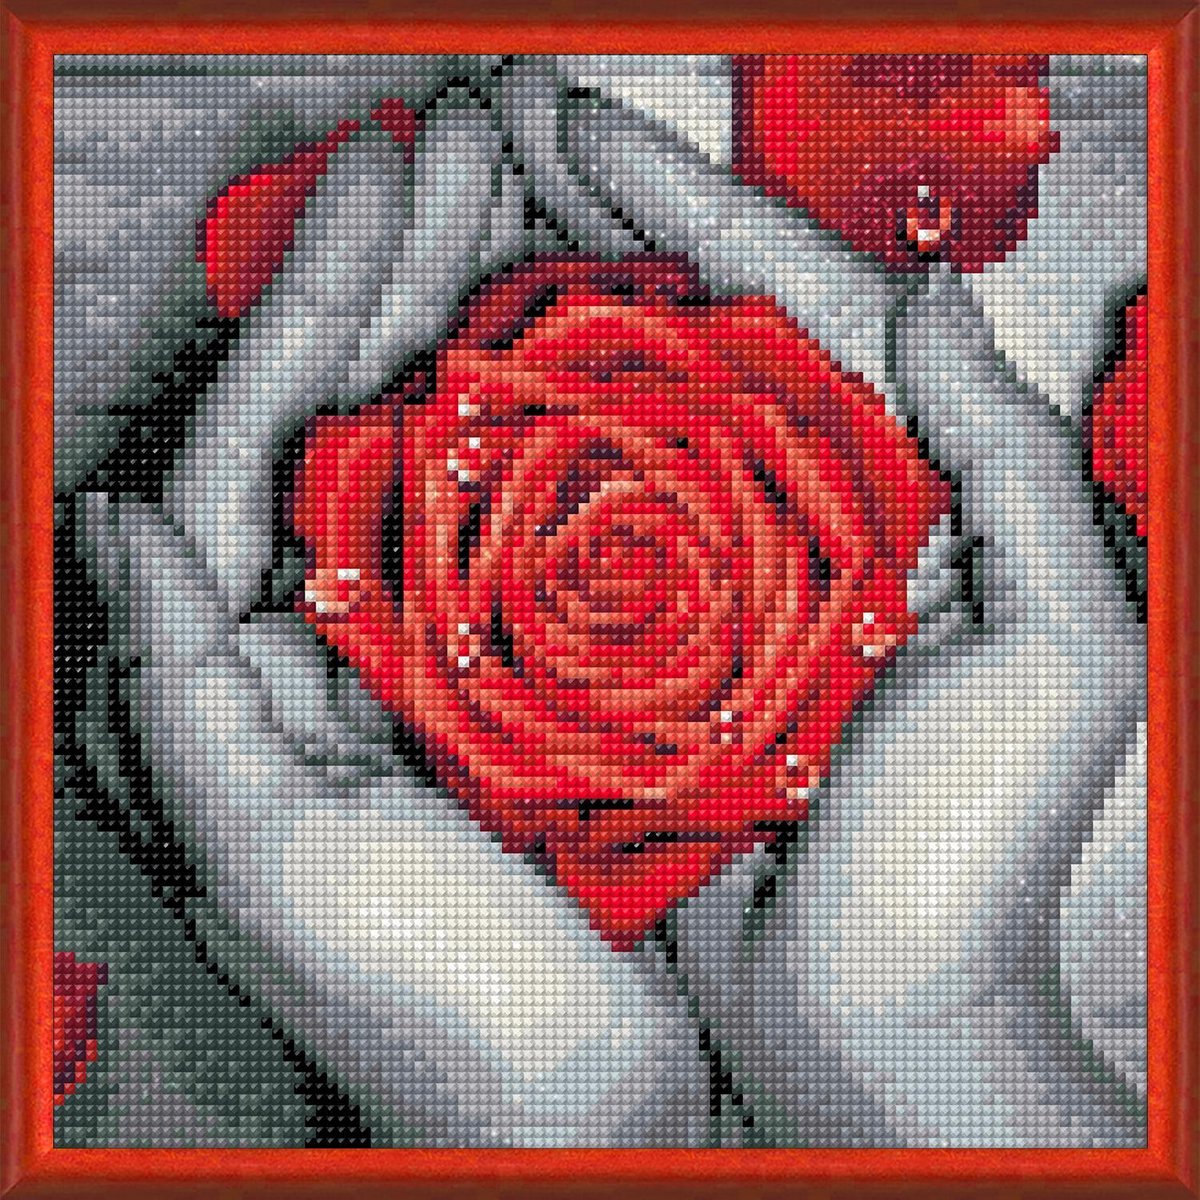 Rose in hands 25 x 25 cm